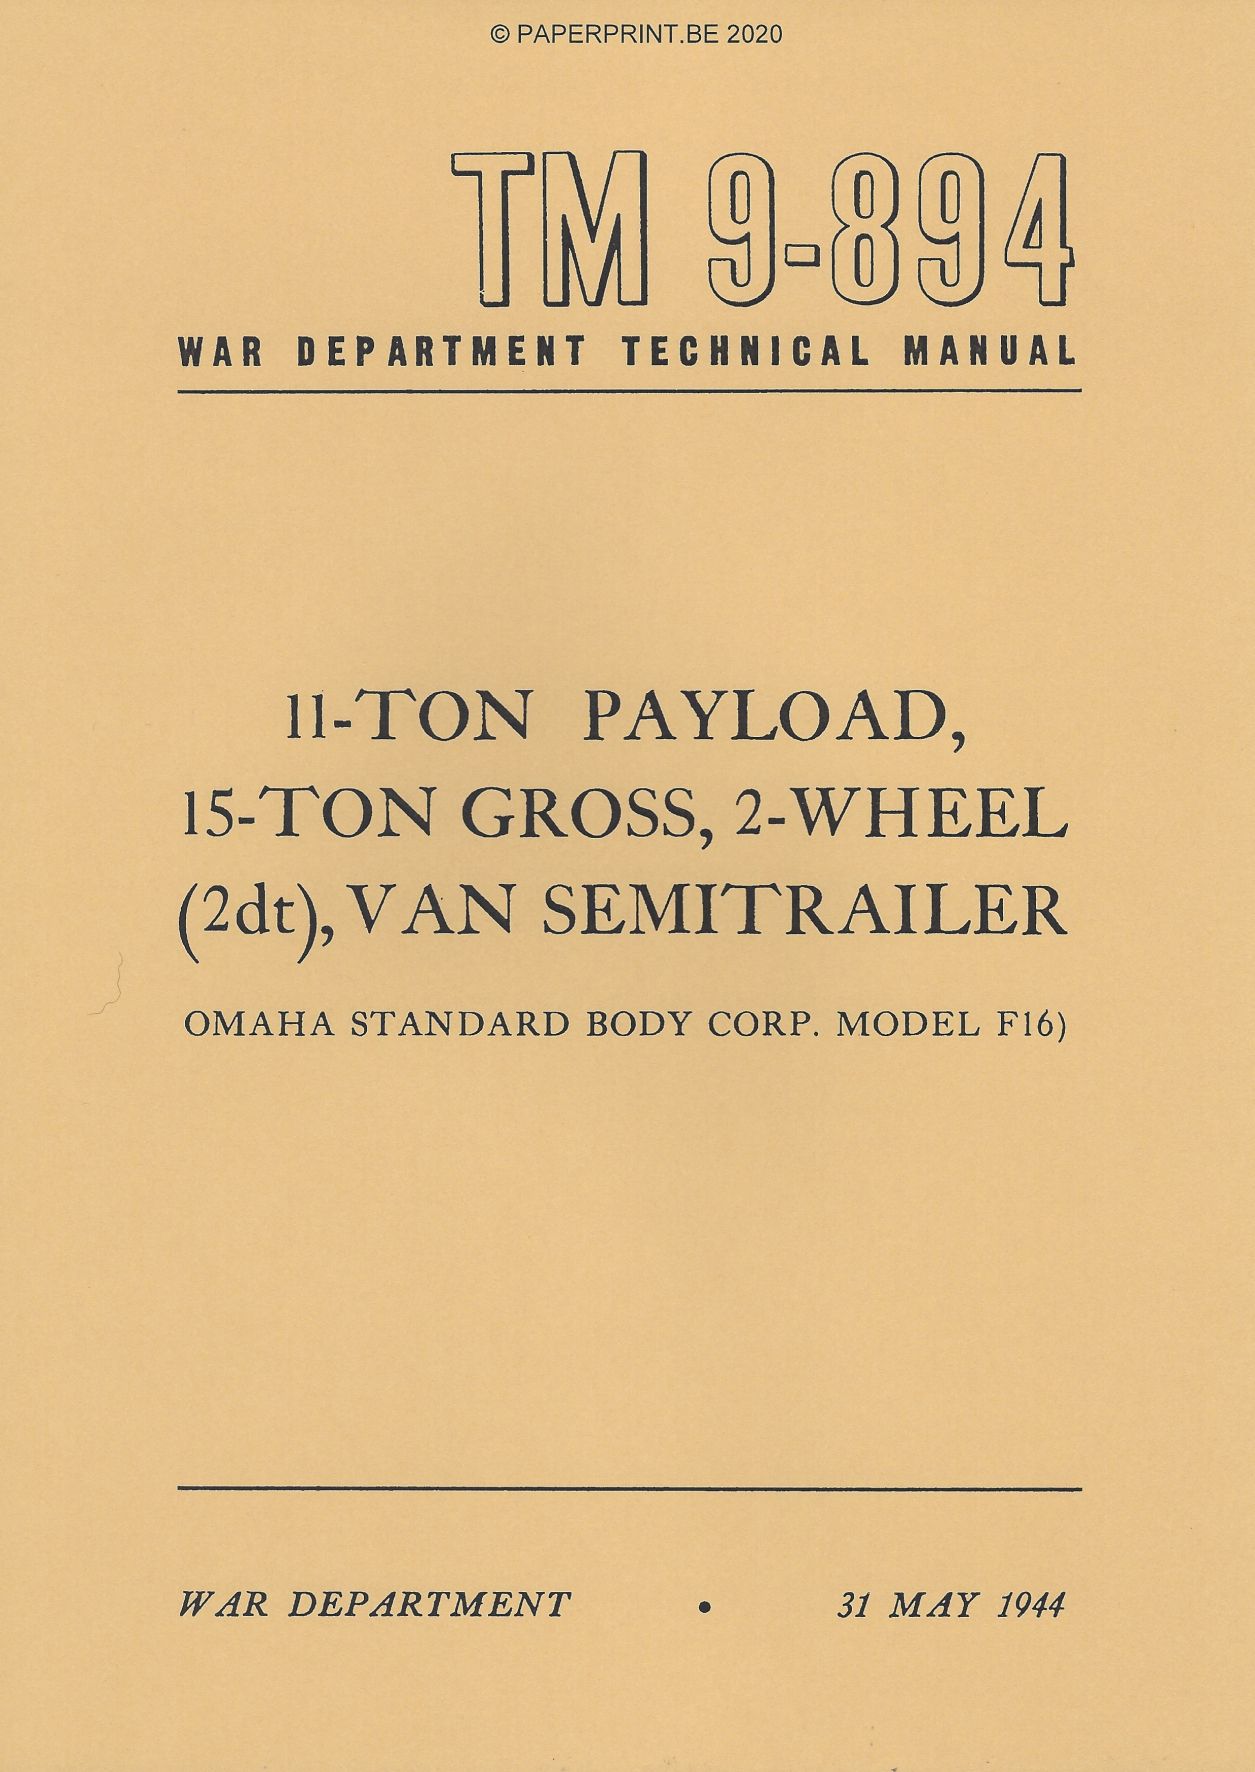 TM 9-894 US 11-TON PAYLOAD, 15-TON GROSS, 2-WHEEL (2DT), VAN SEMITRAILER